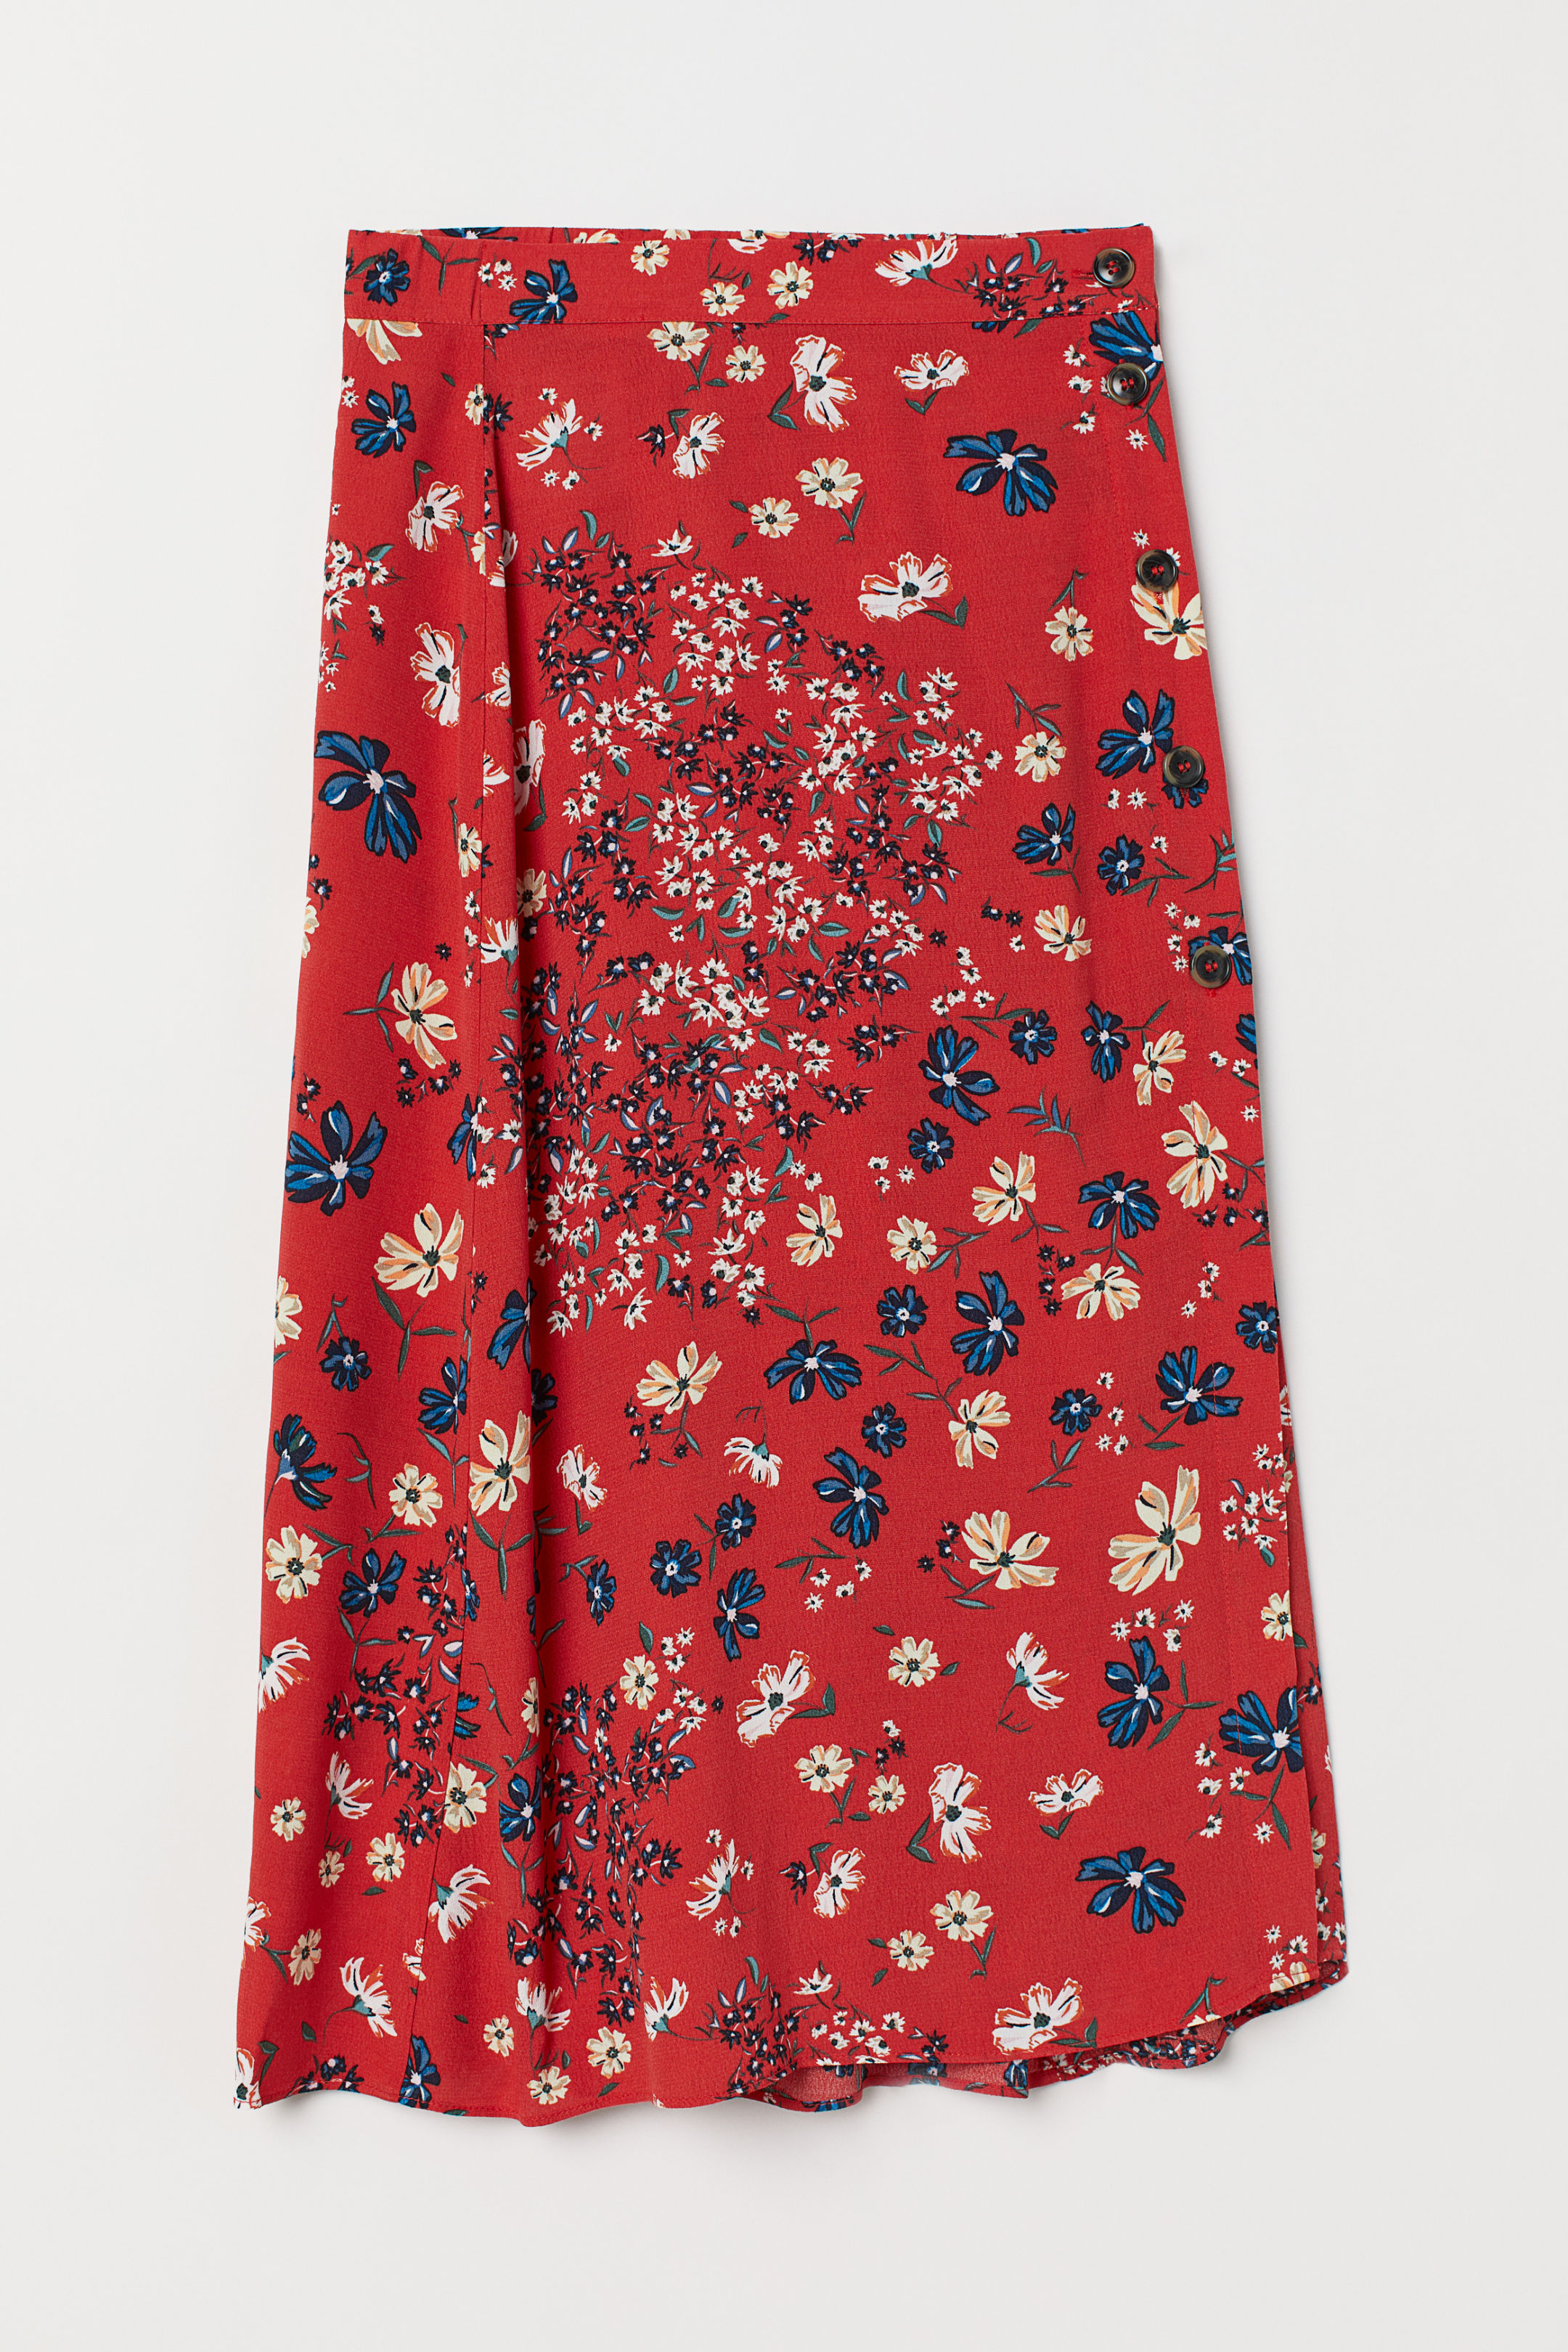 H&M Calf - Length Red Floral Skirt